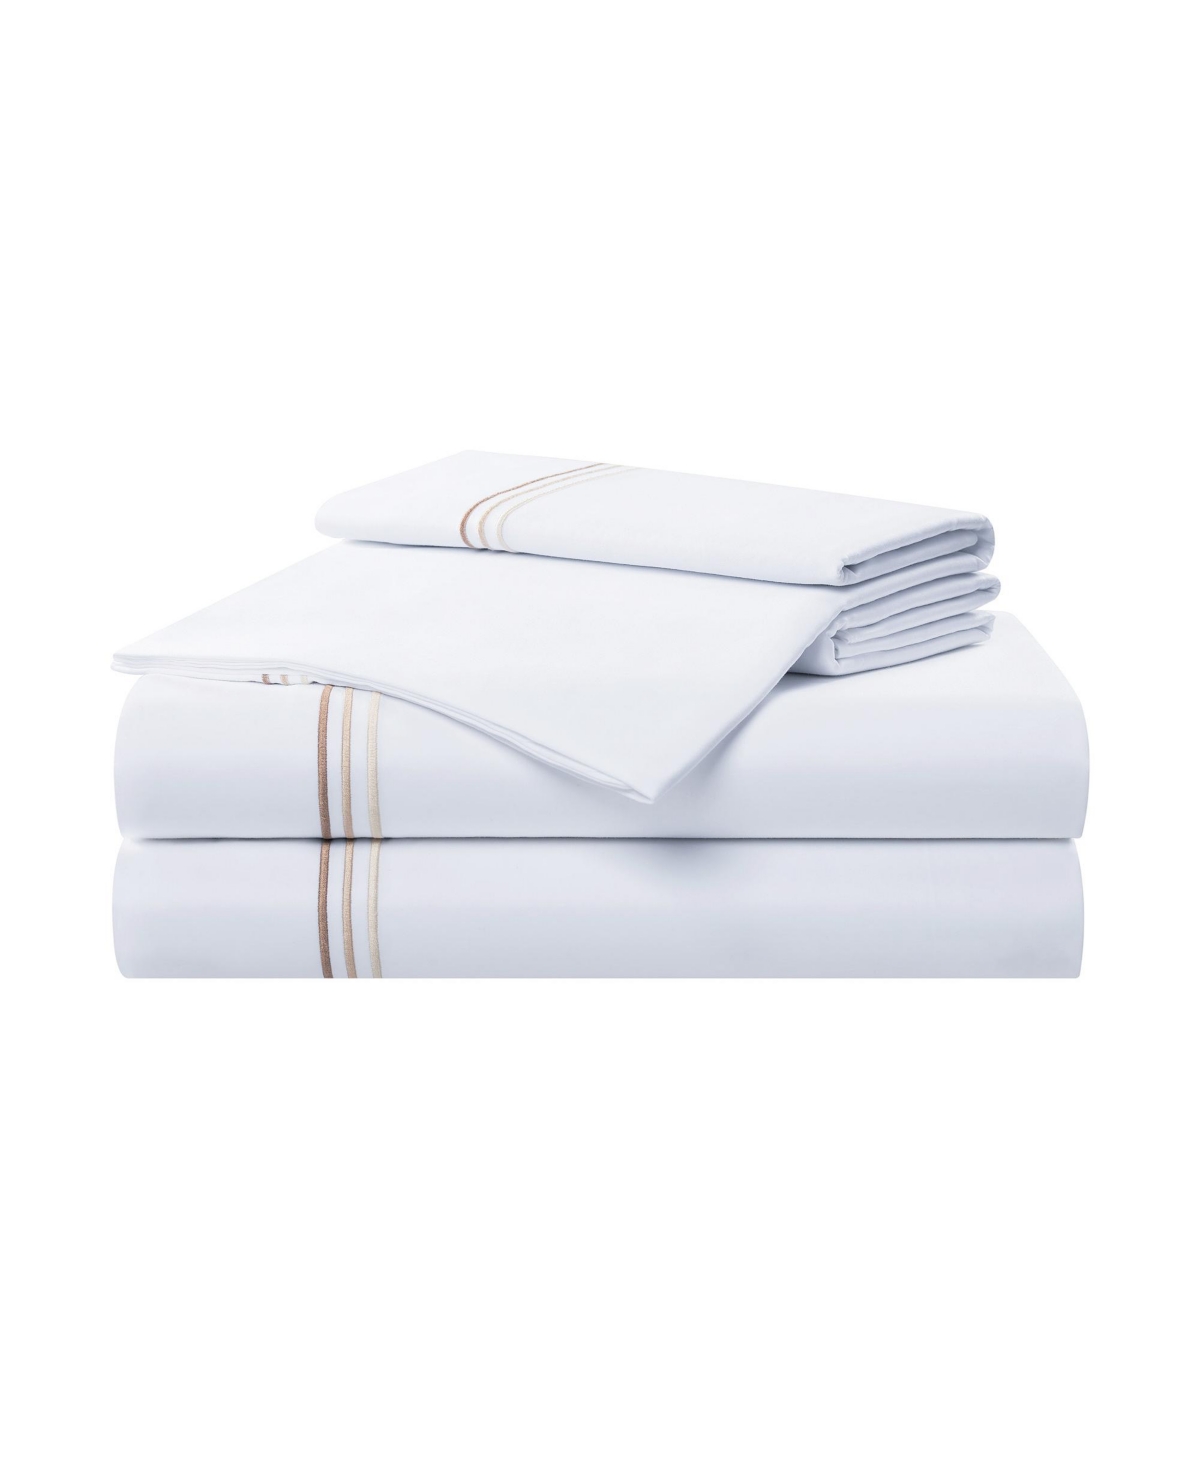 Aston And Arden Sateen Twin Sheet Set, 1 Flat Sheet, 1 Fitted Sheet, 2 Pillowcases, 600 Thread Count, Sateen Cotton, In Beige